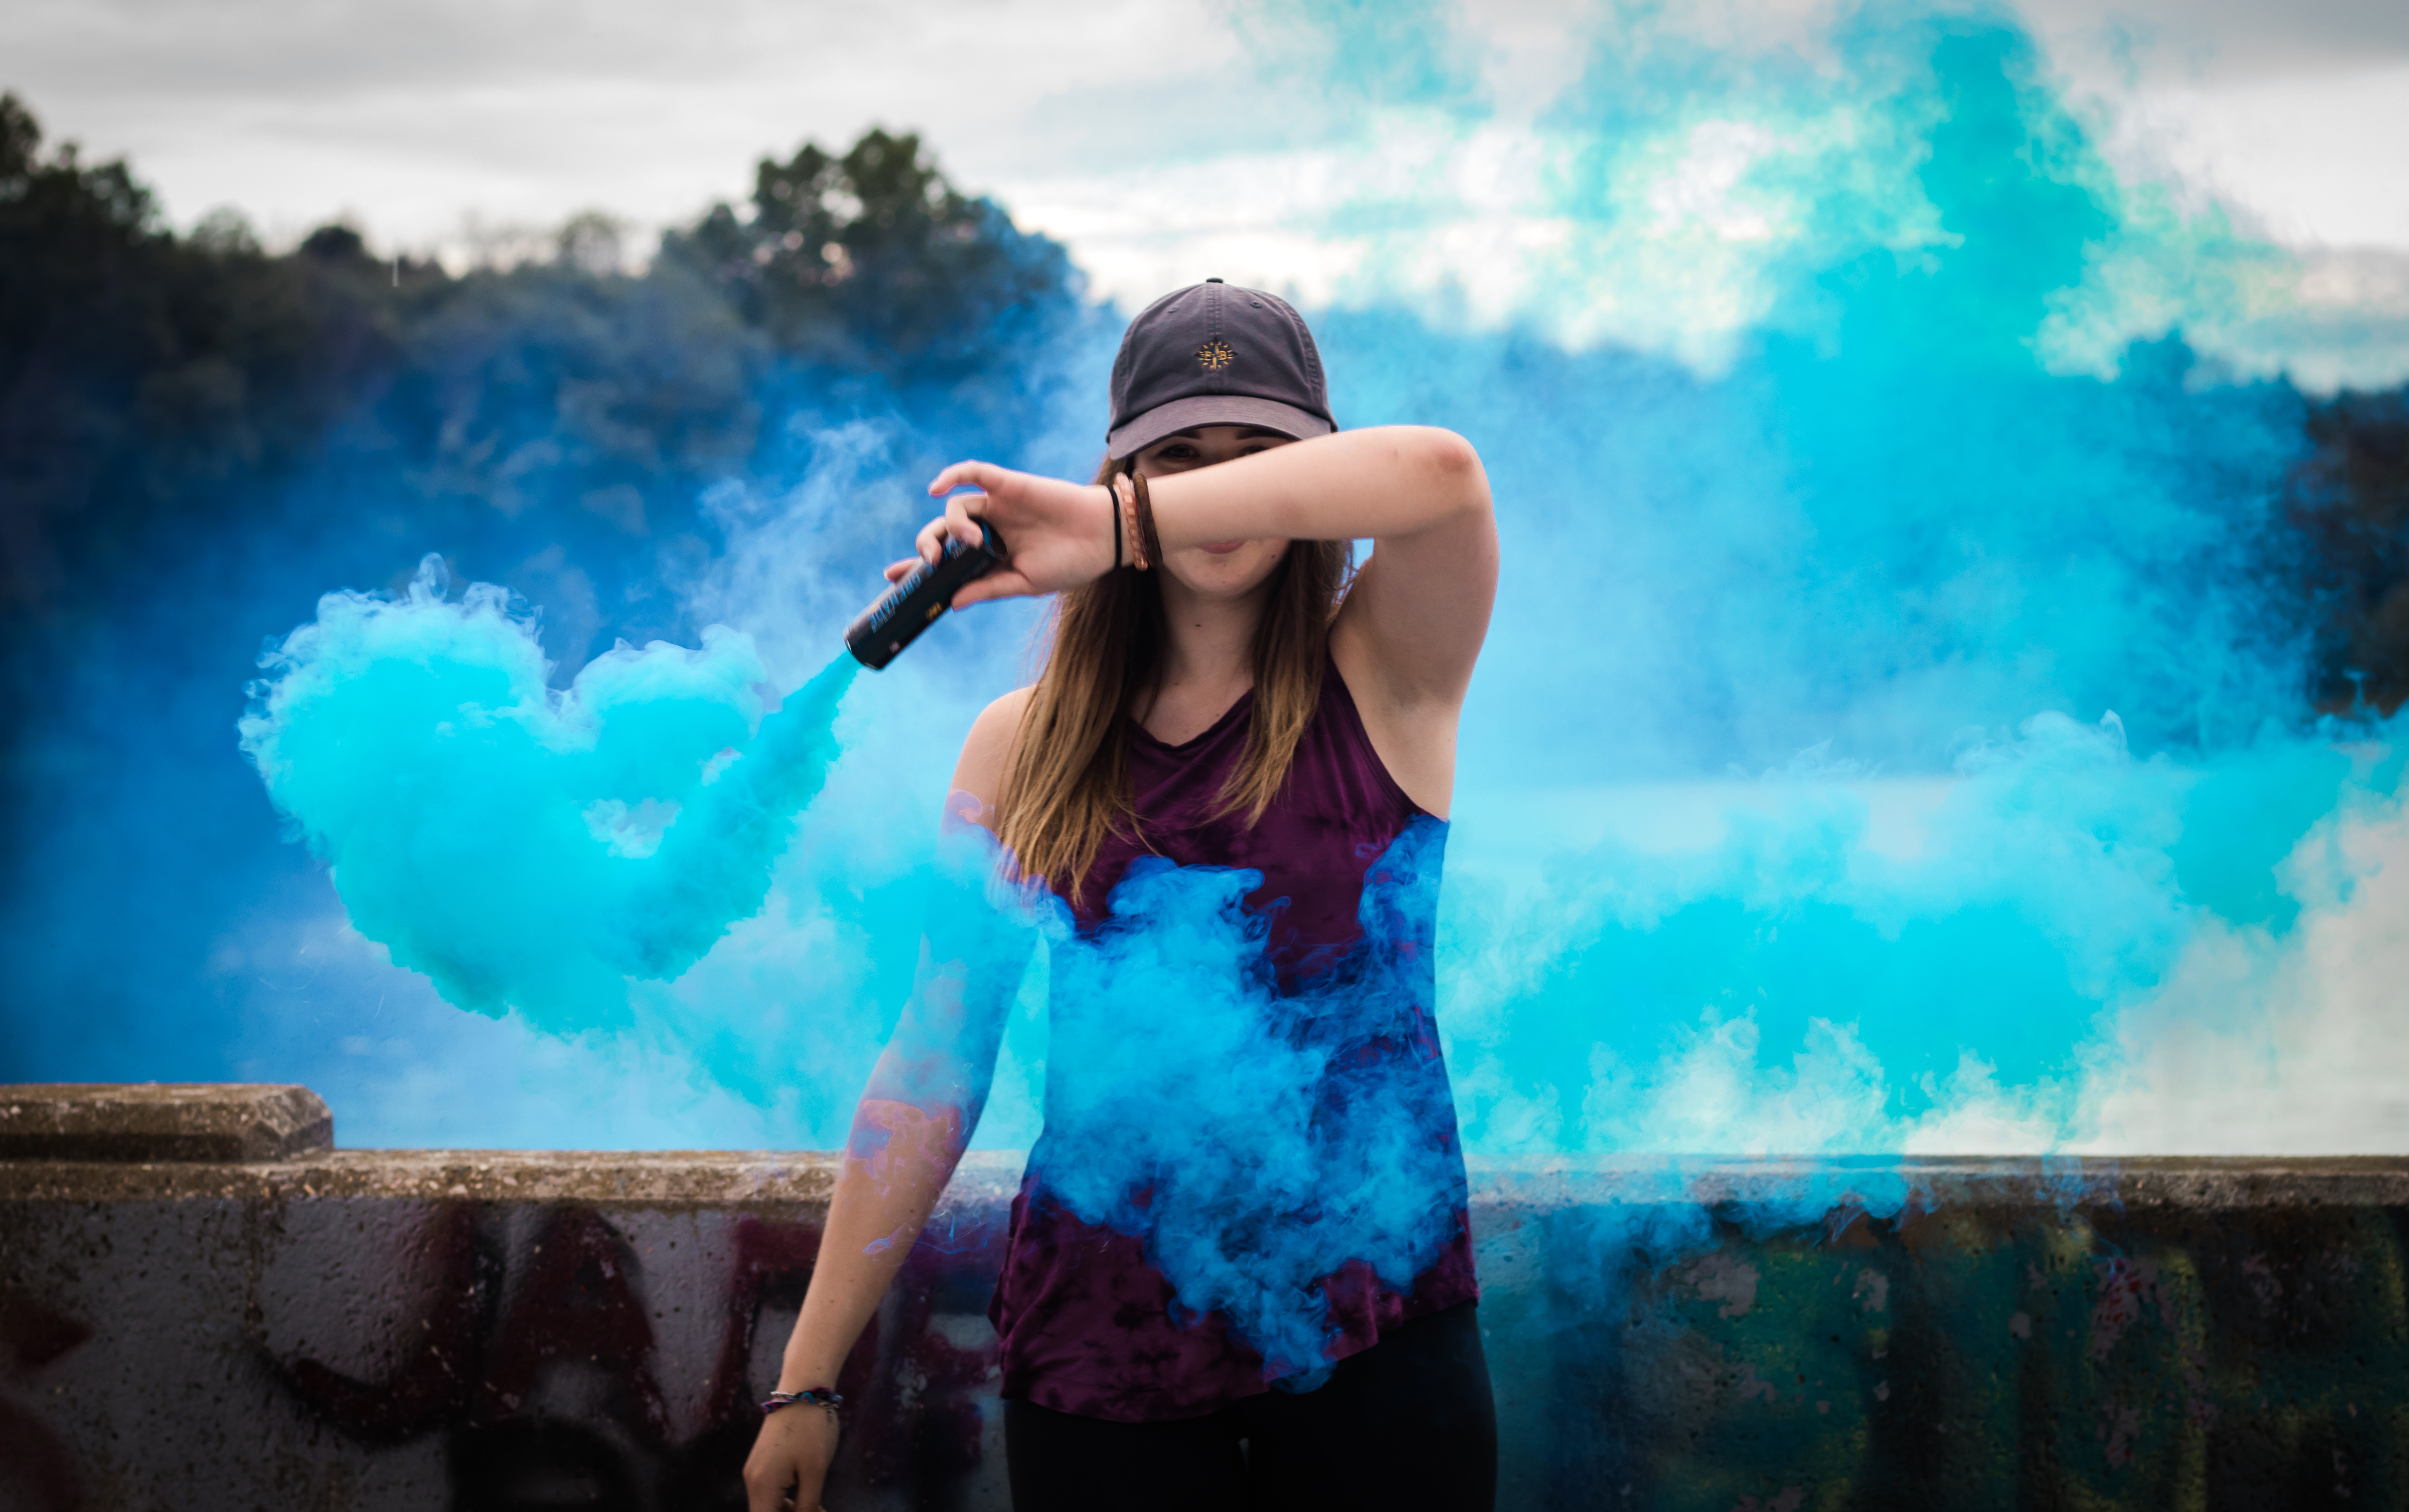 Women wave around blue smoke wand image - Free stock photo - Public ...